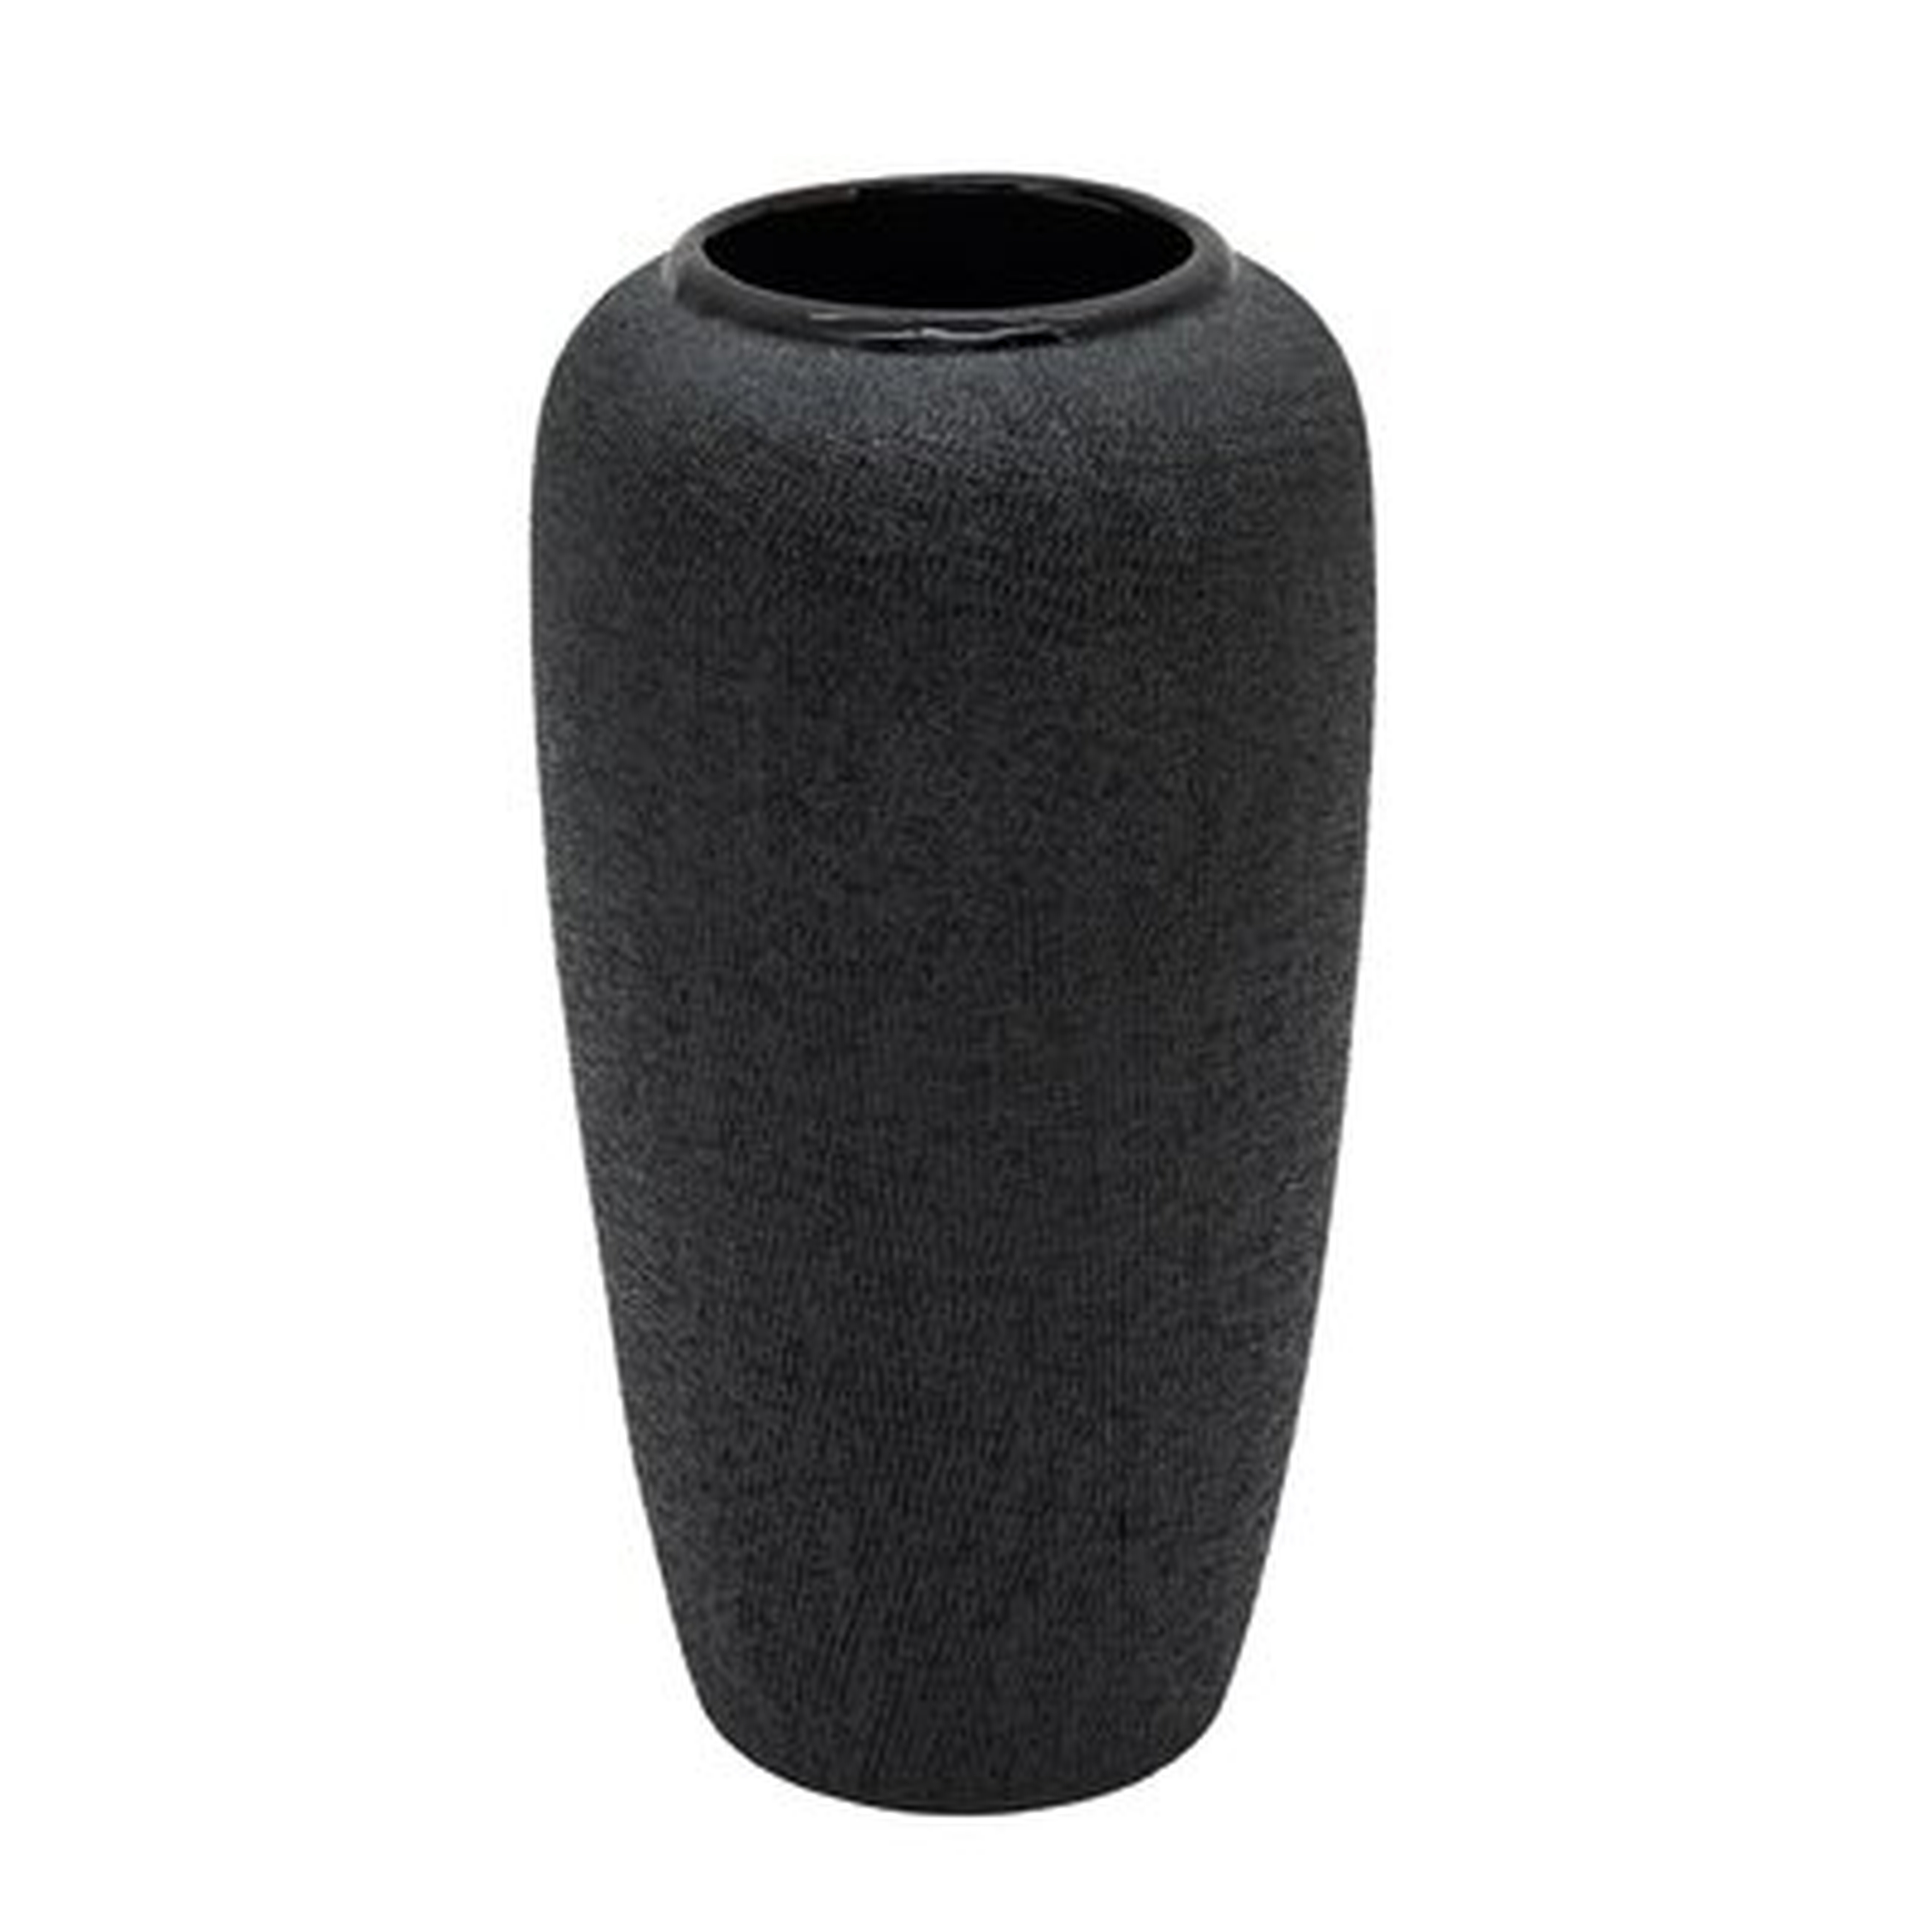 Deskins Black 12.25" Ceramic Table Vase - Wayfair